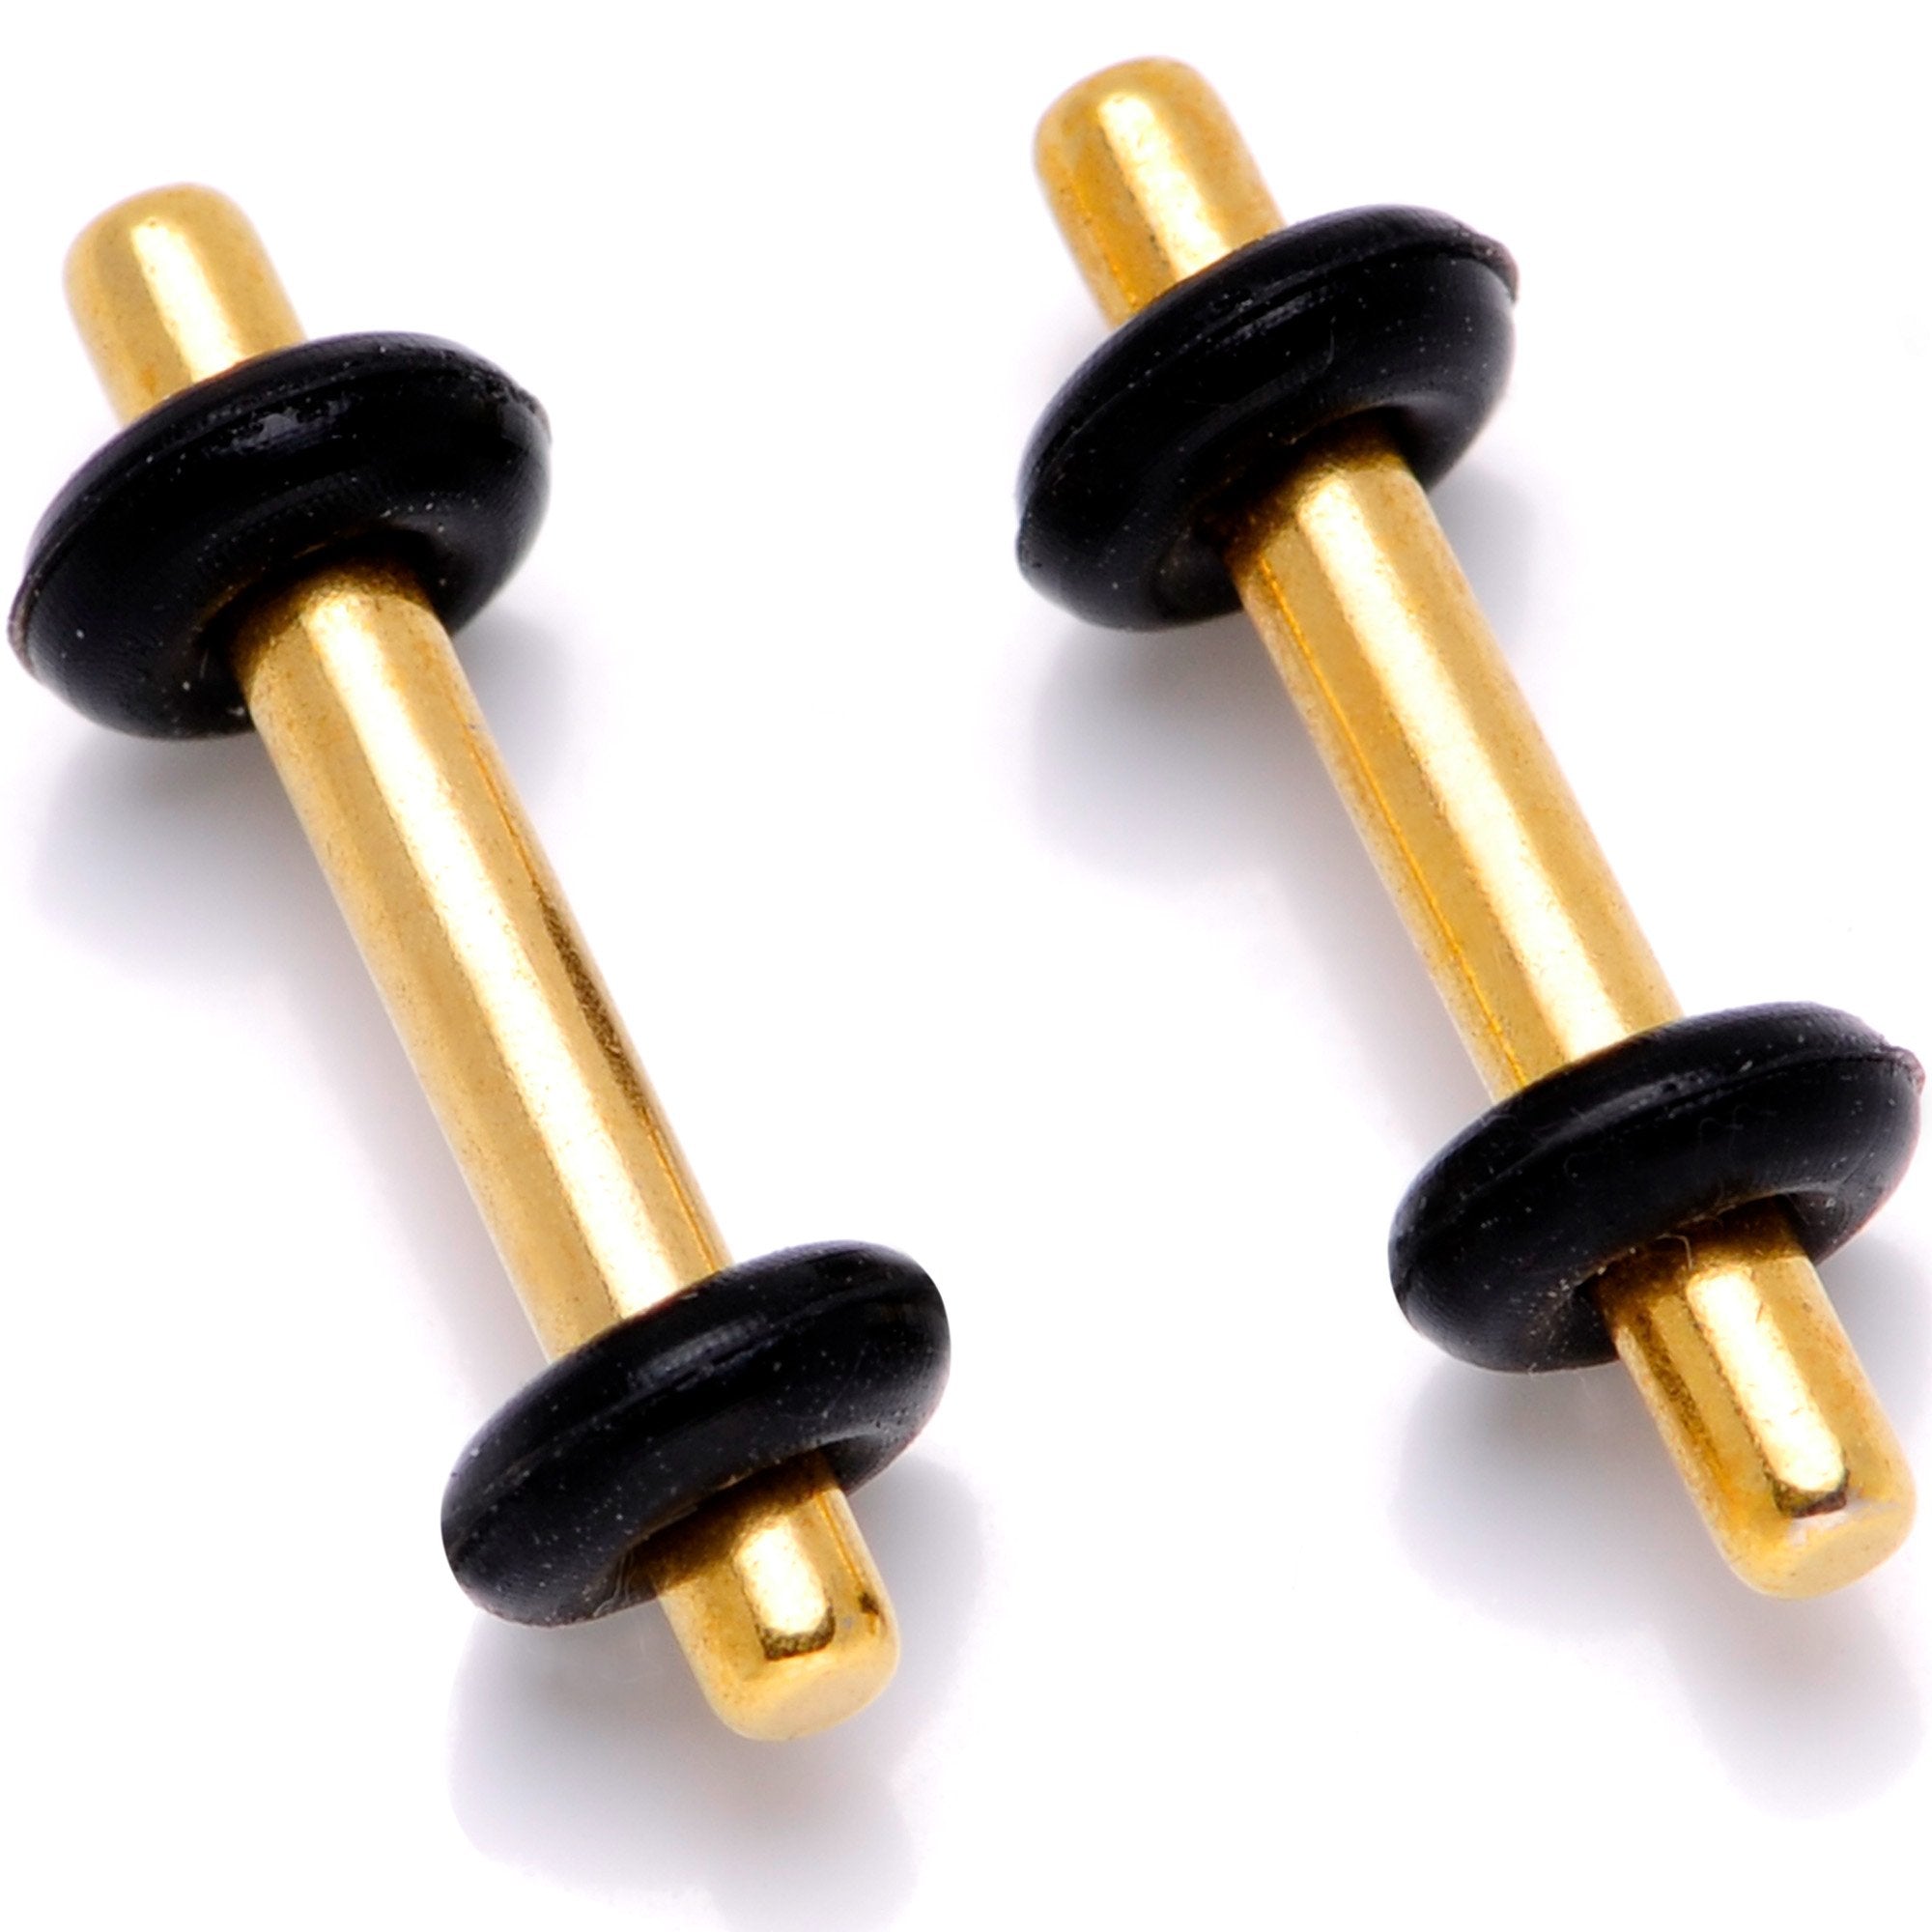 Gold Tone Anodized Titanium Micro Straight Plug Set 14 Gauge to 8 Gauge